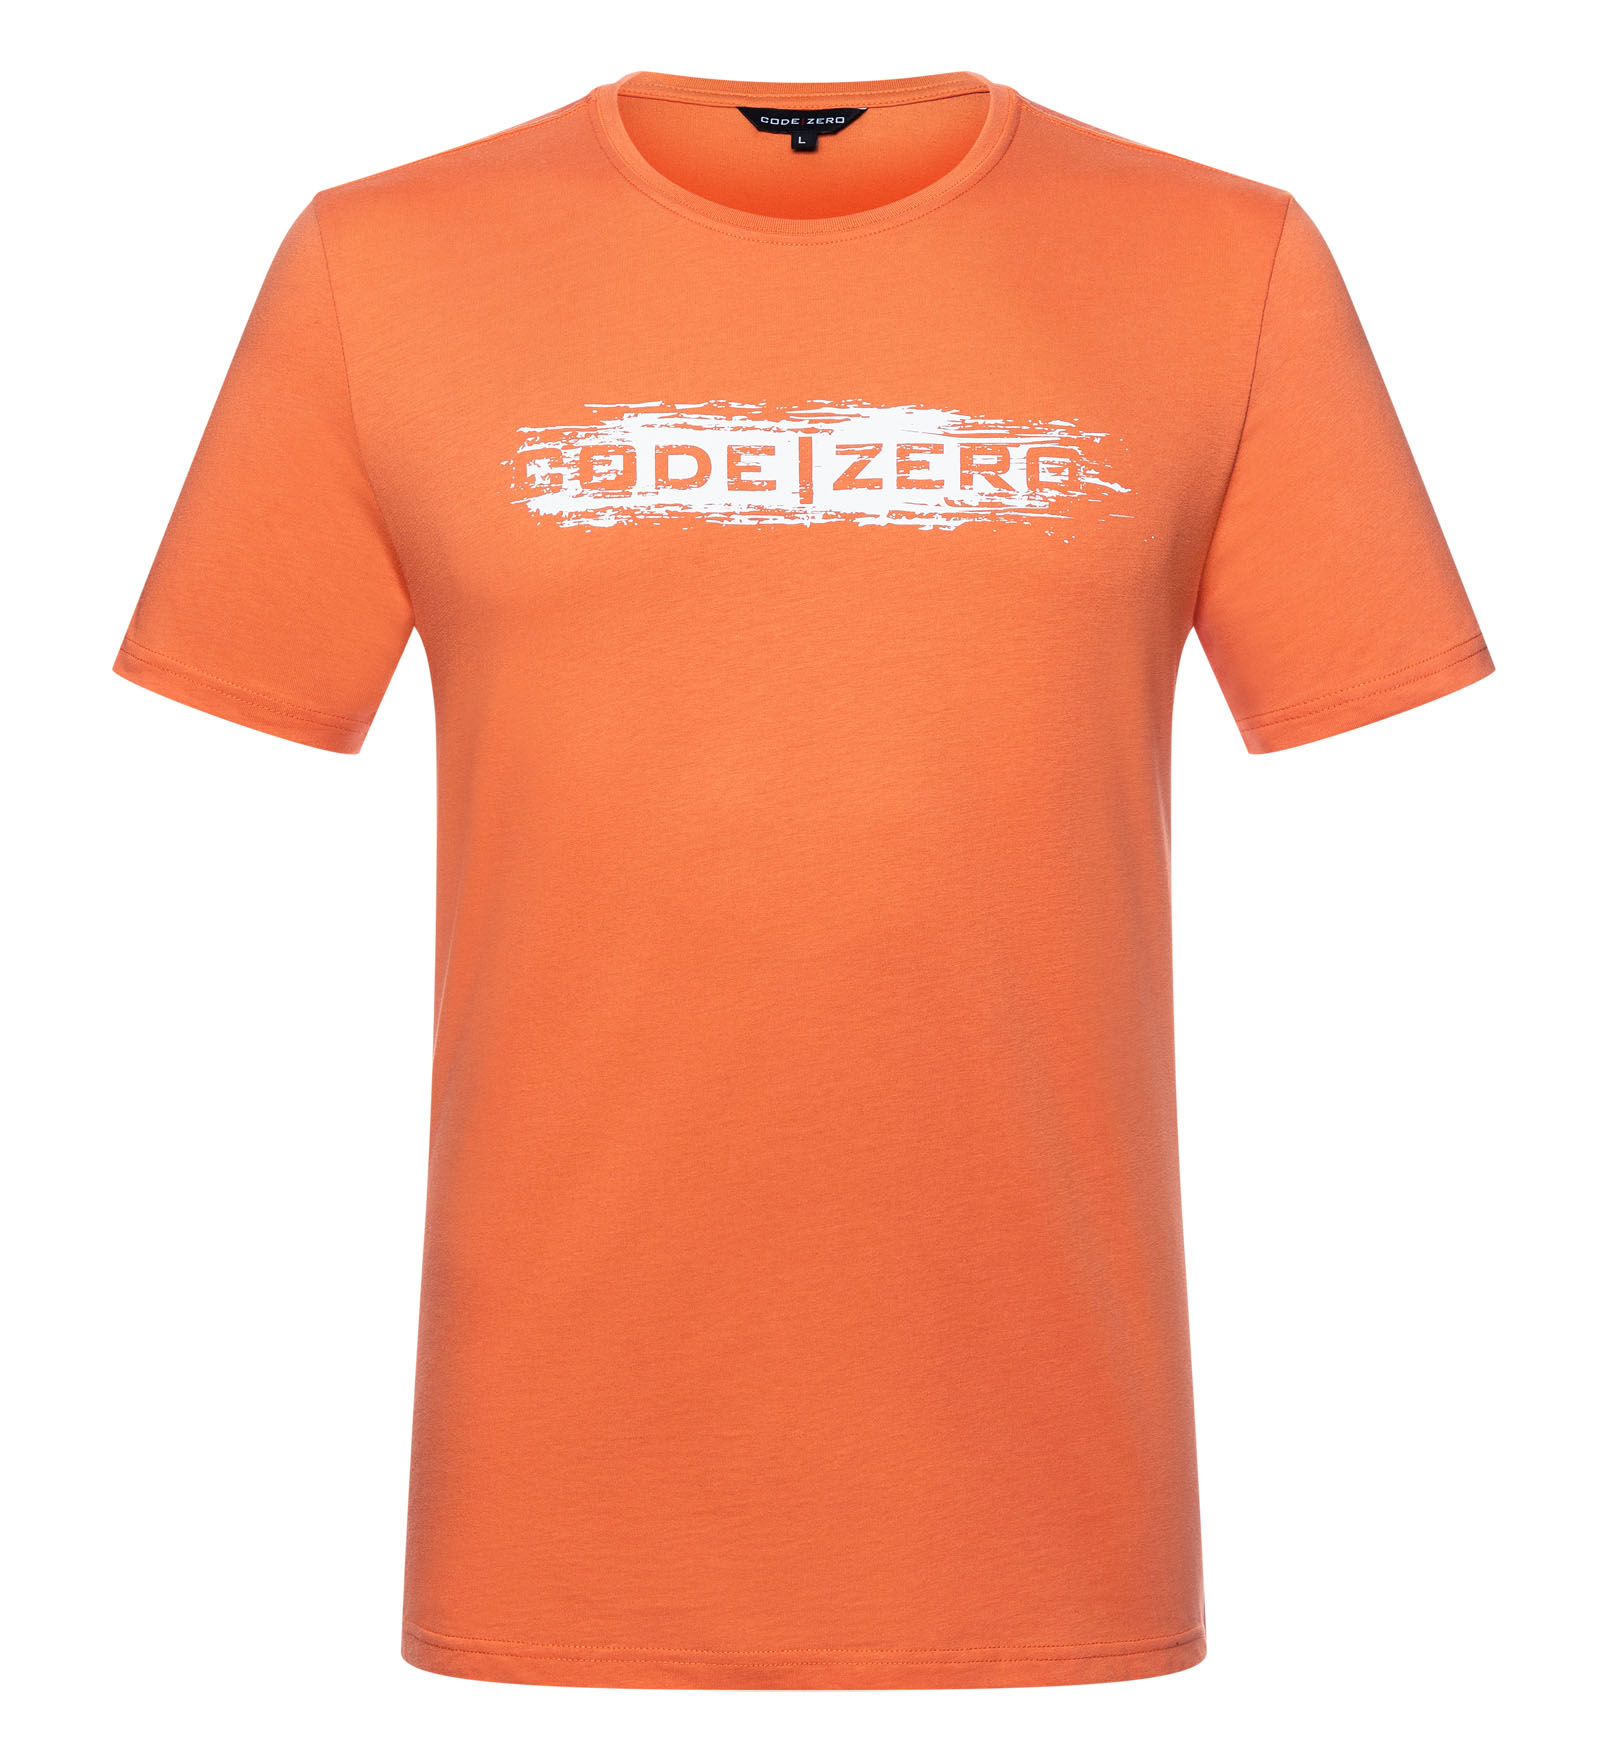 T-Shirt Herren Painted orange XL CODE-ZERO von CODE-ZERO